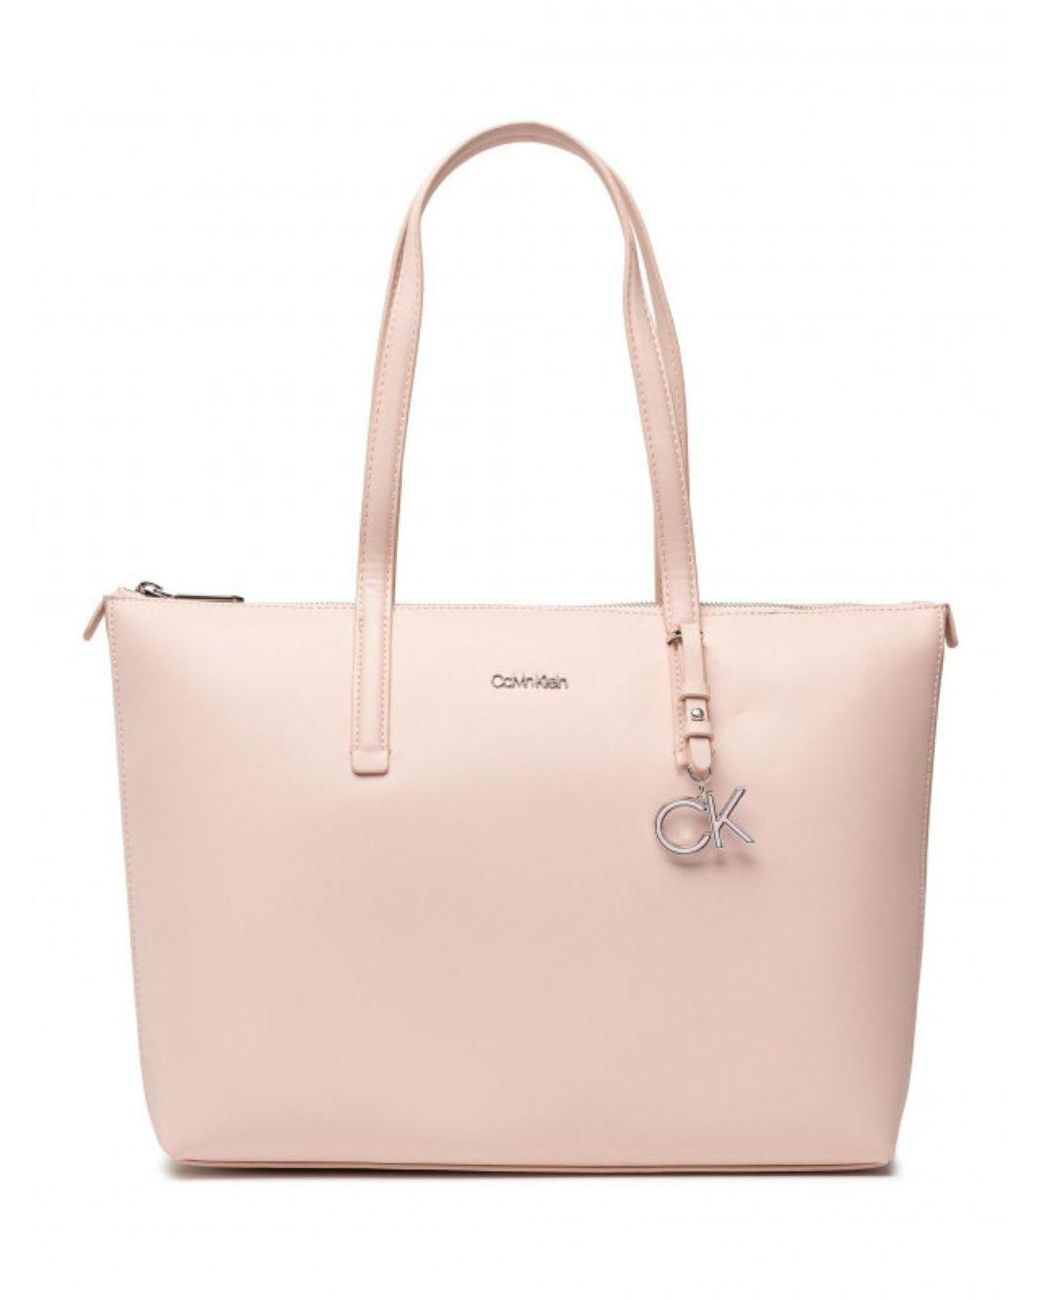 Calvin Klein Ck Must Tote Bag in Pink | Lyst